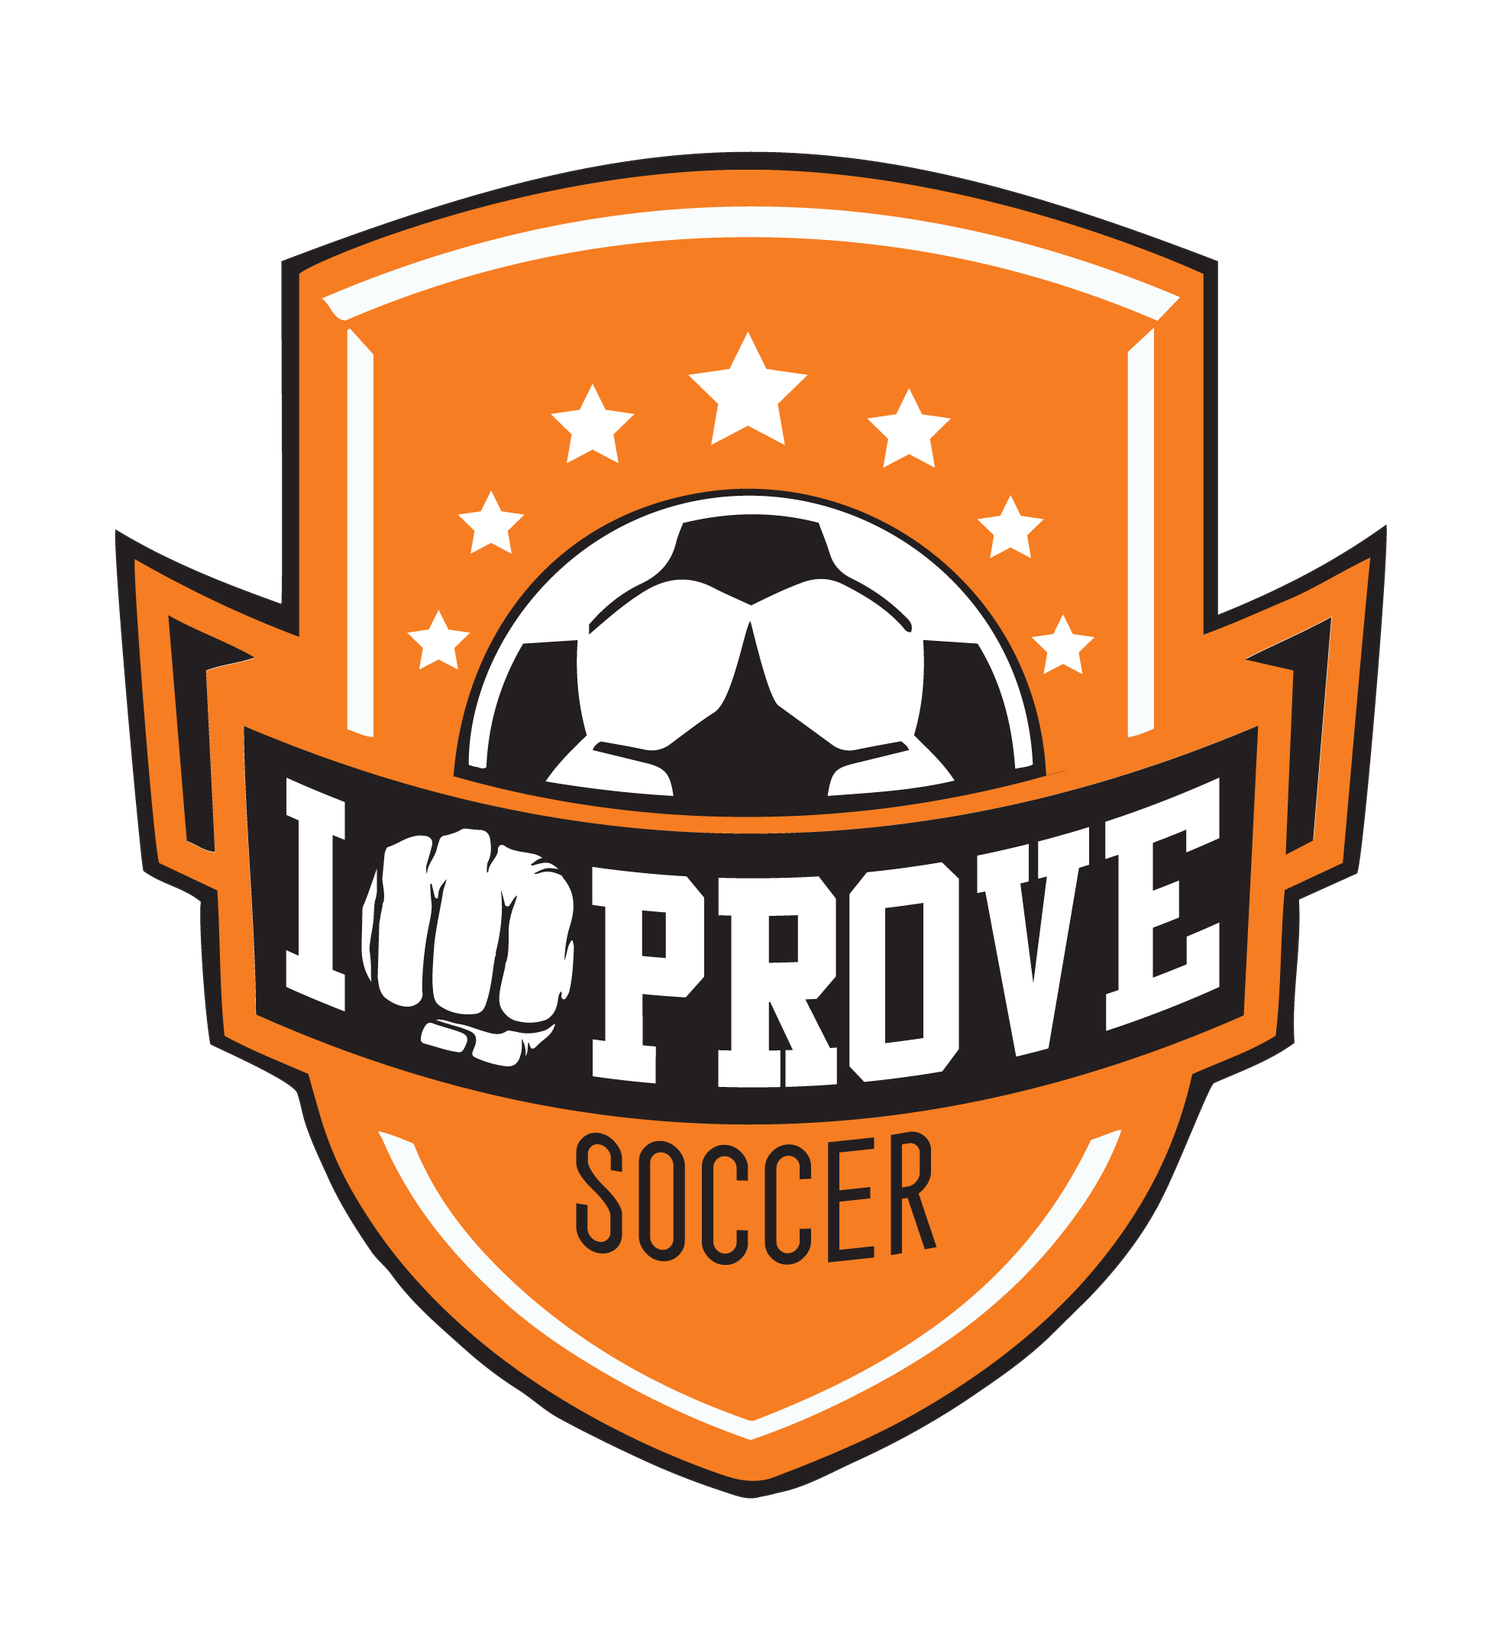 Improve Soccer 